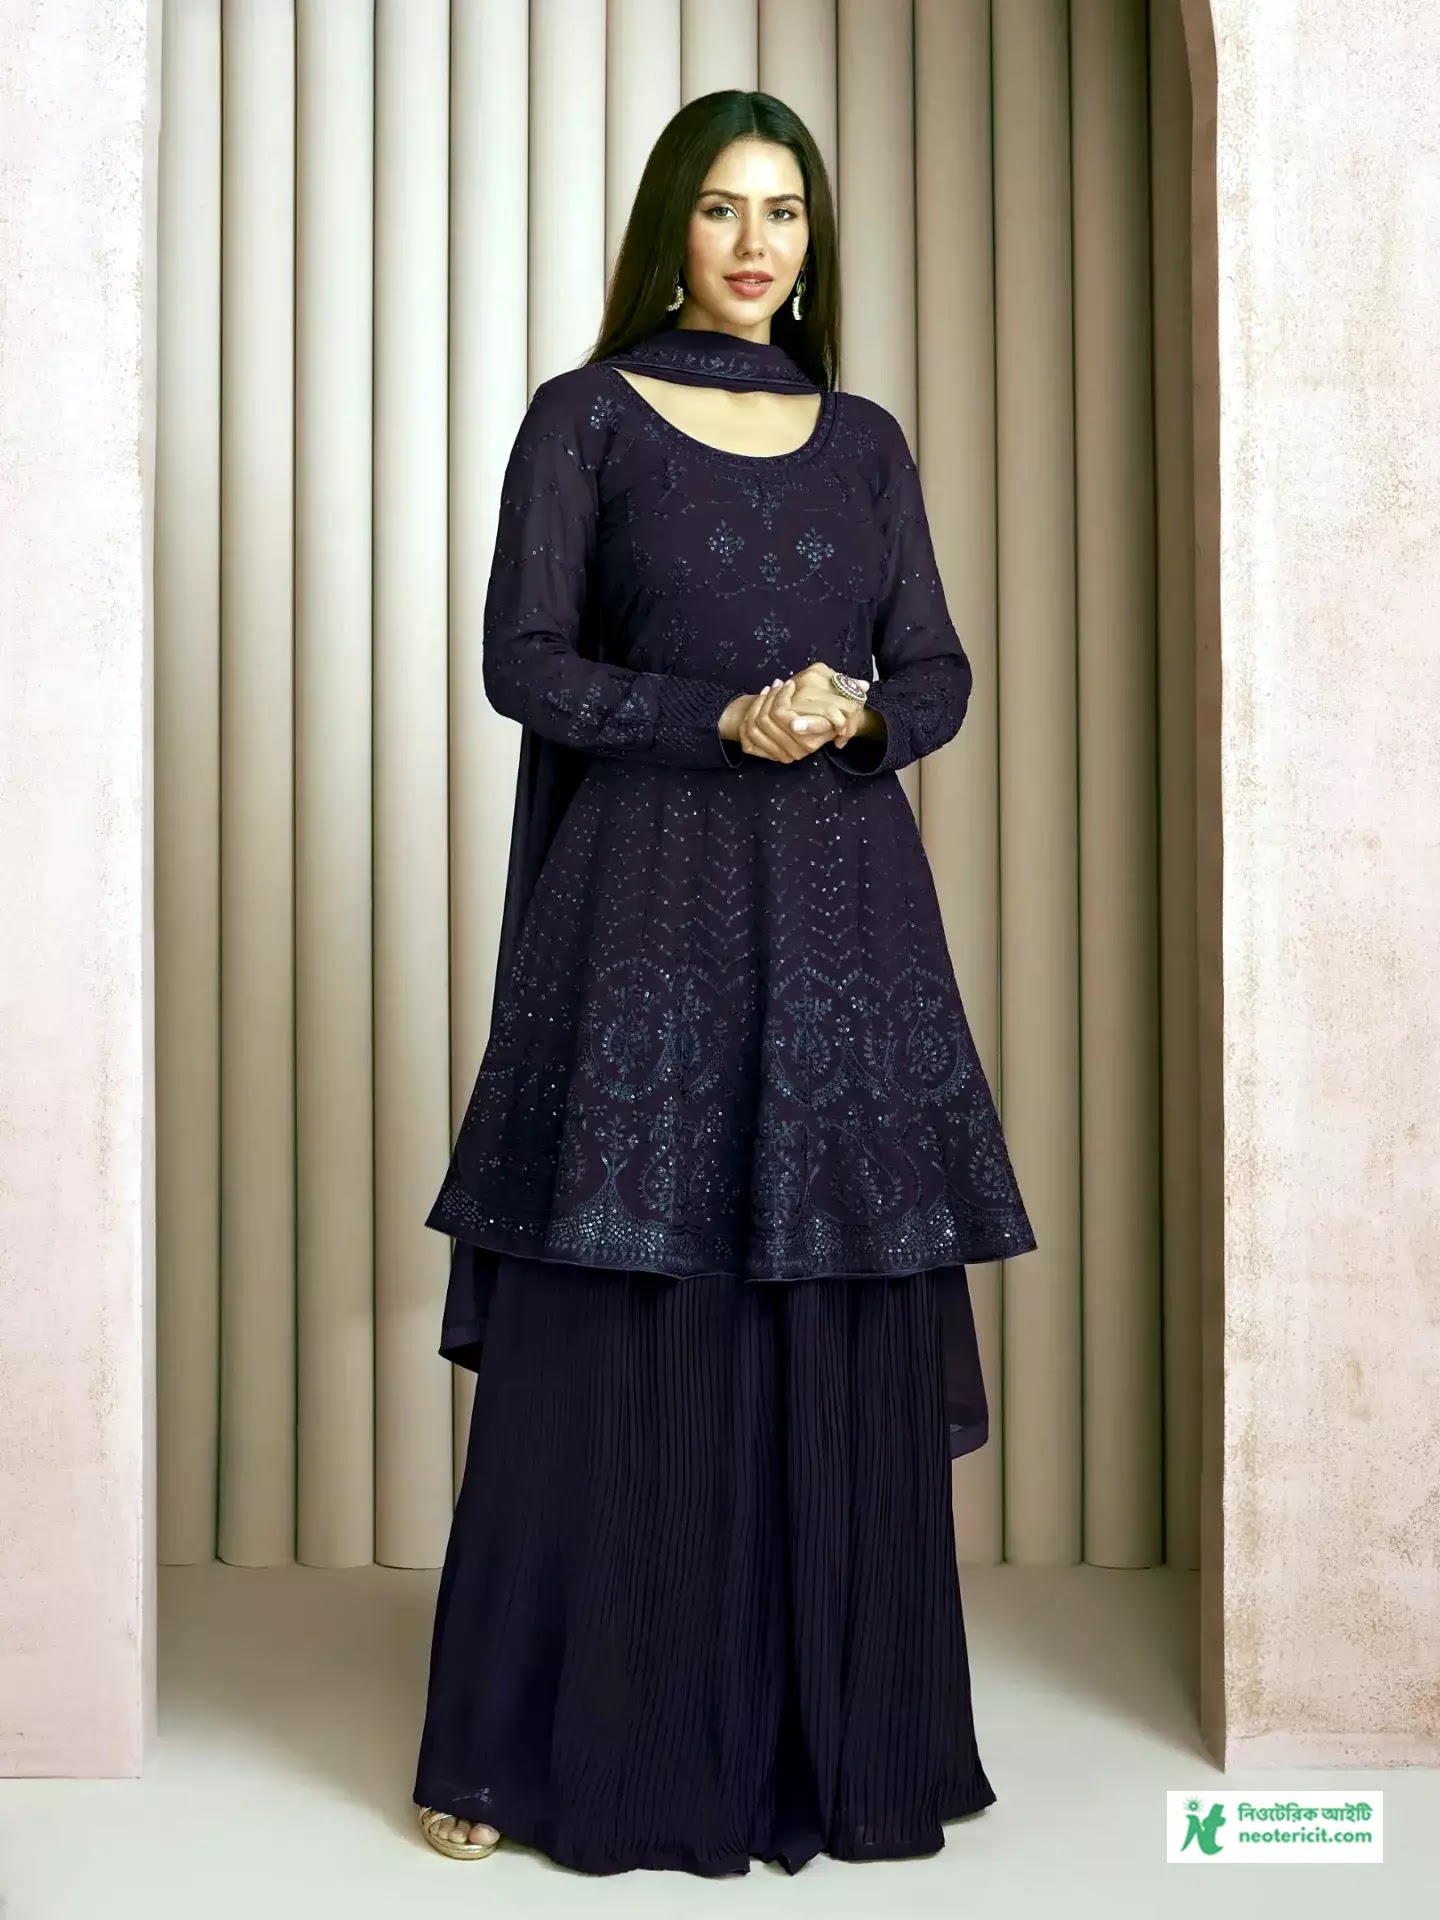 Sharara Dress Design - Sharara Dress Collection - Sharara Dress Design - Sharara Dress Pick - sharara dress - NeotericIT.com - Image no 25